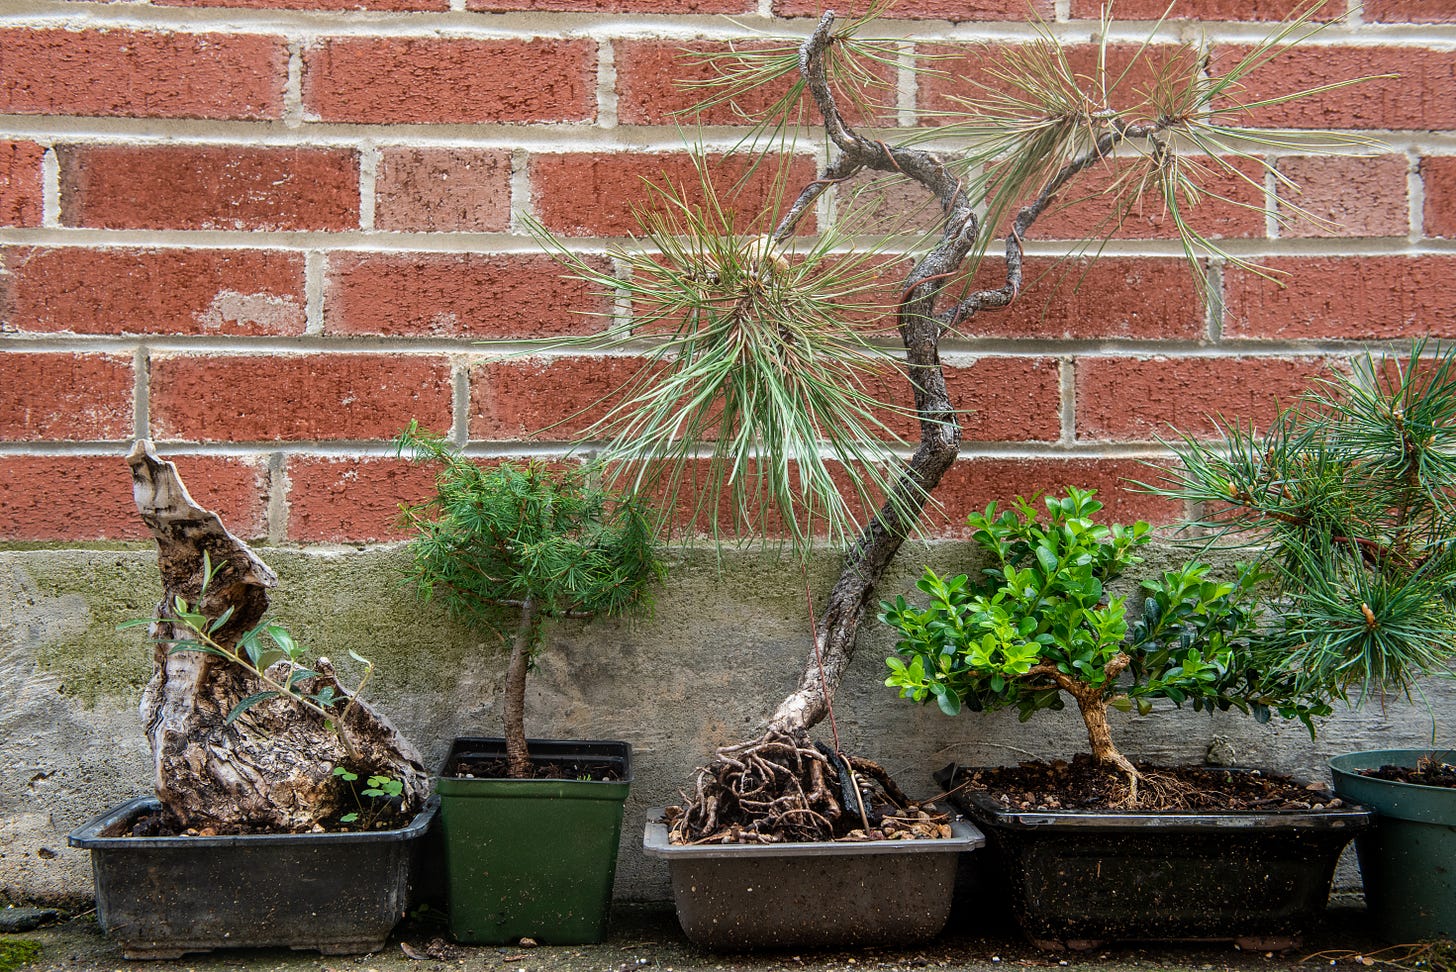 Image description: A lineup of some of my bonsai trees against a brick wall. End image description.